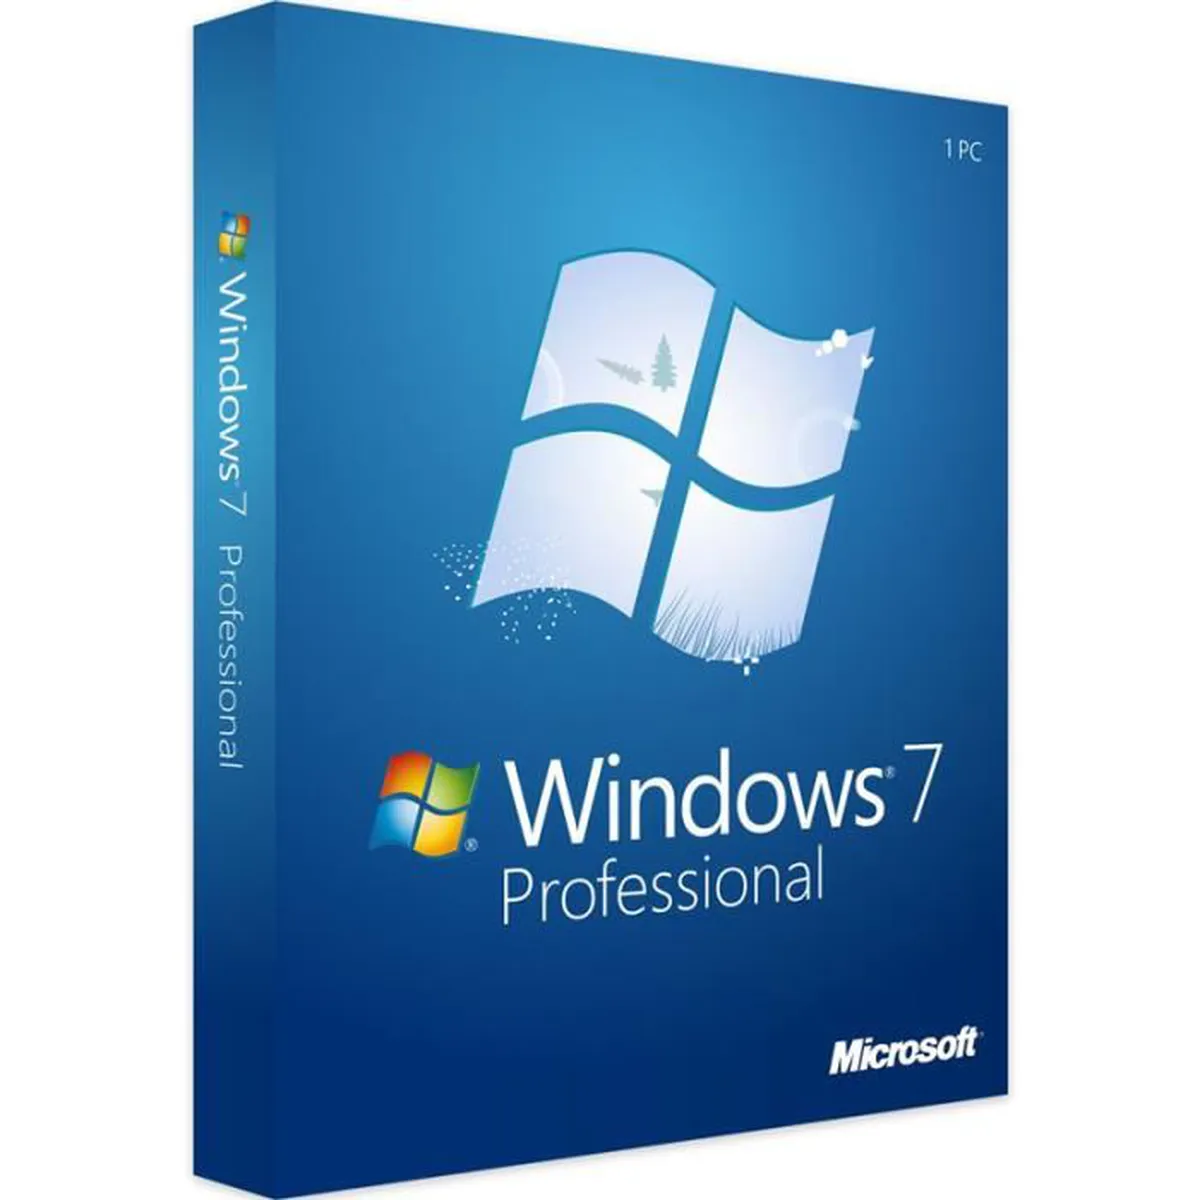 windows 7 professional license key